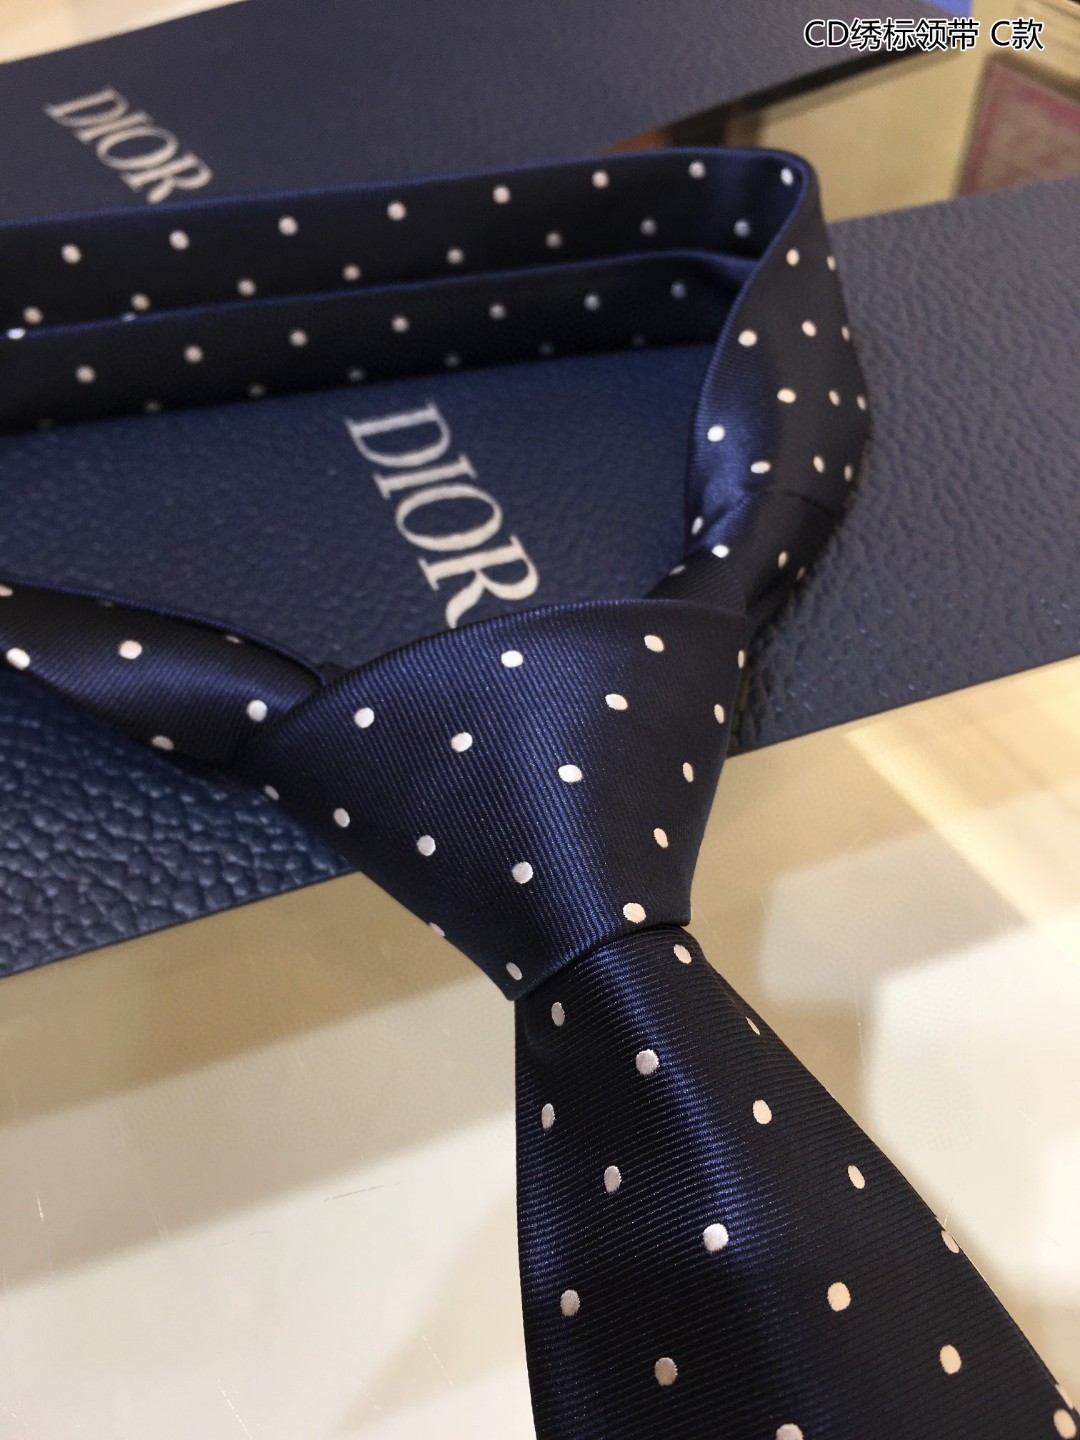 Do家新款领带Dior男士CD绣标领